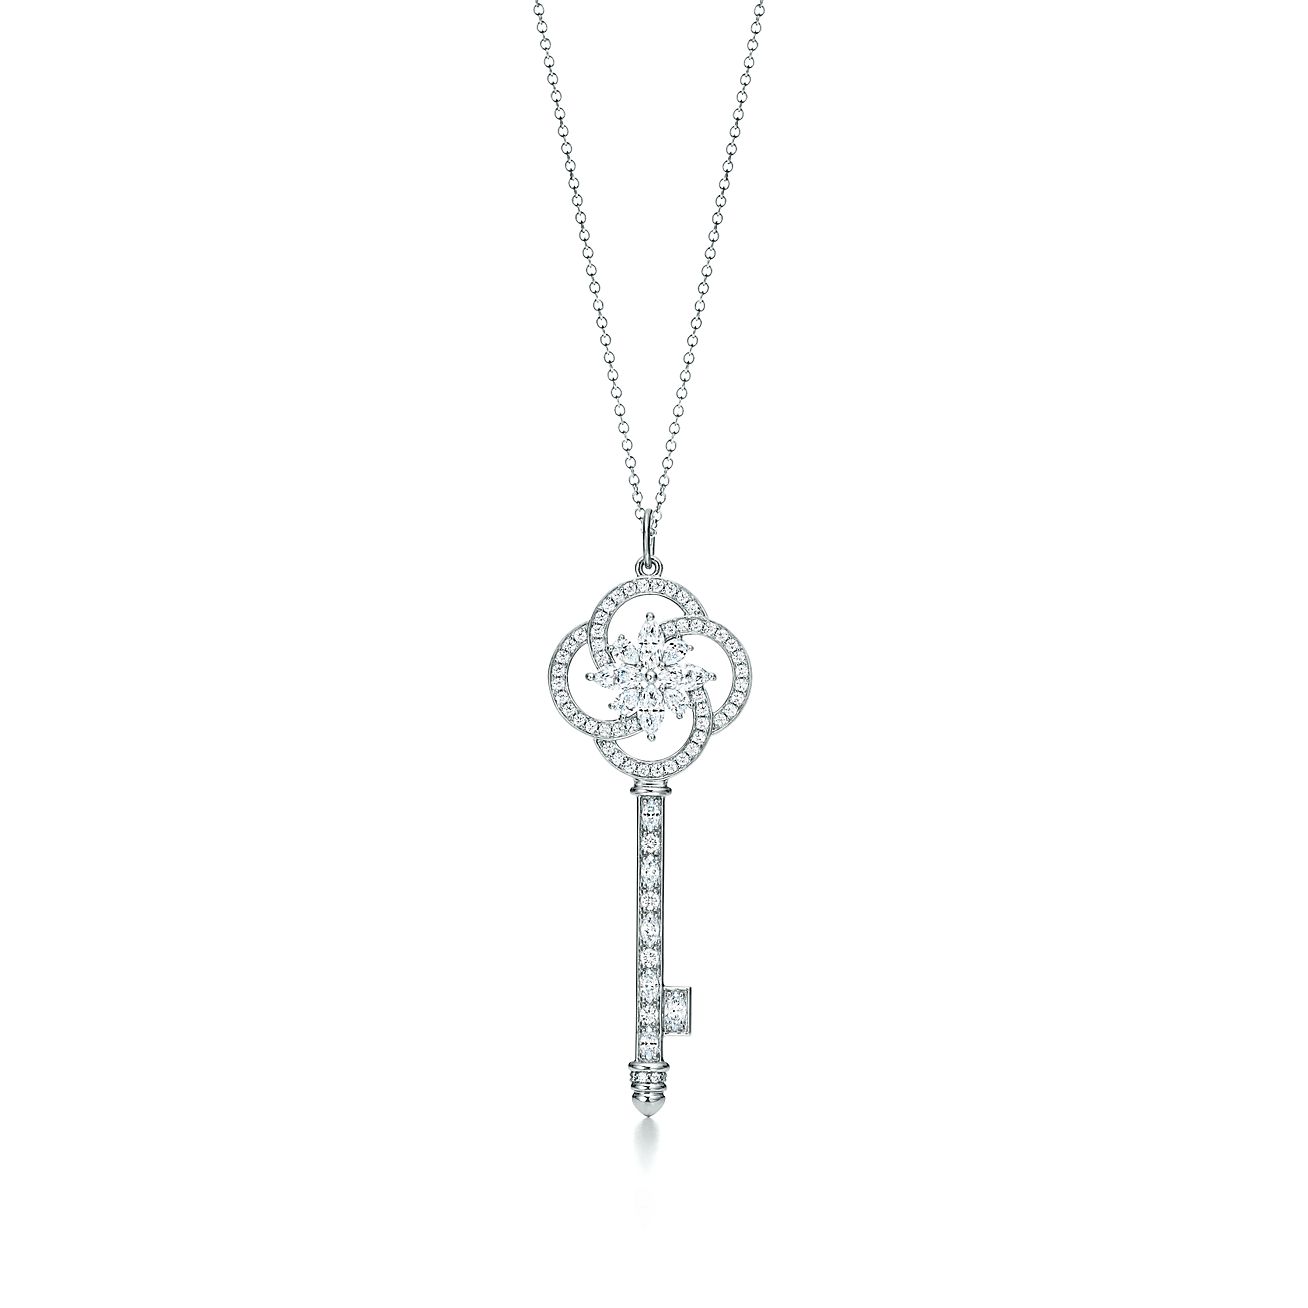 tiffany necklace with key